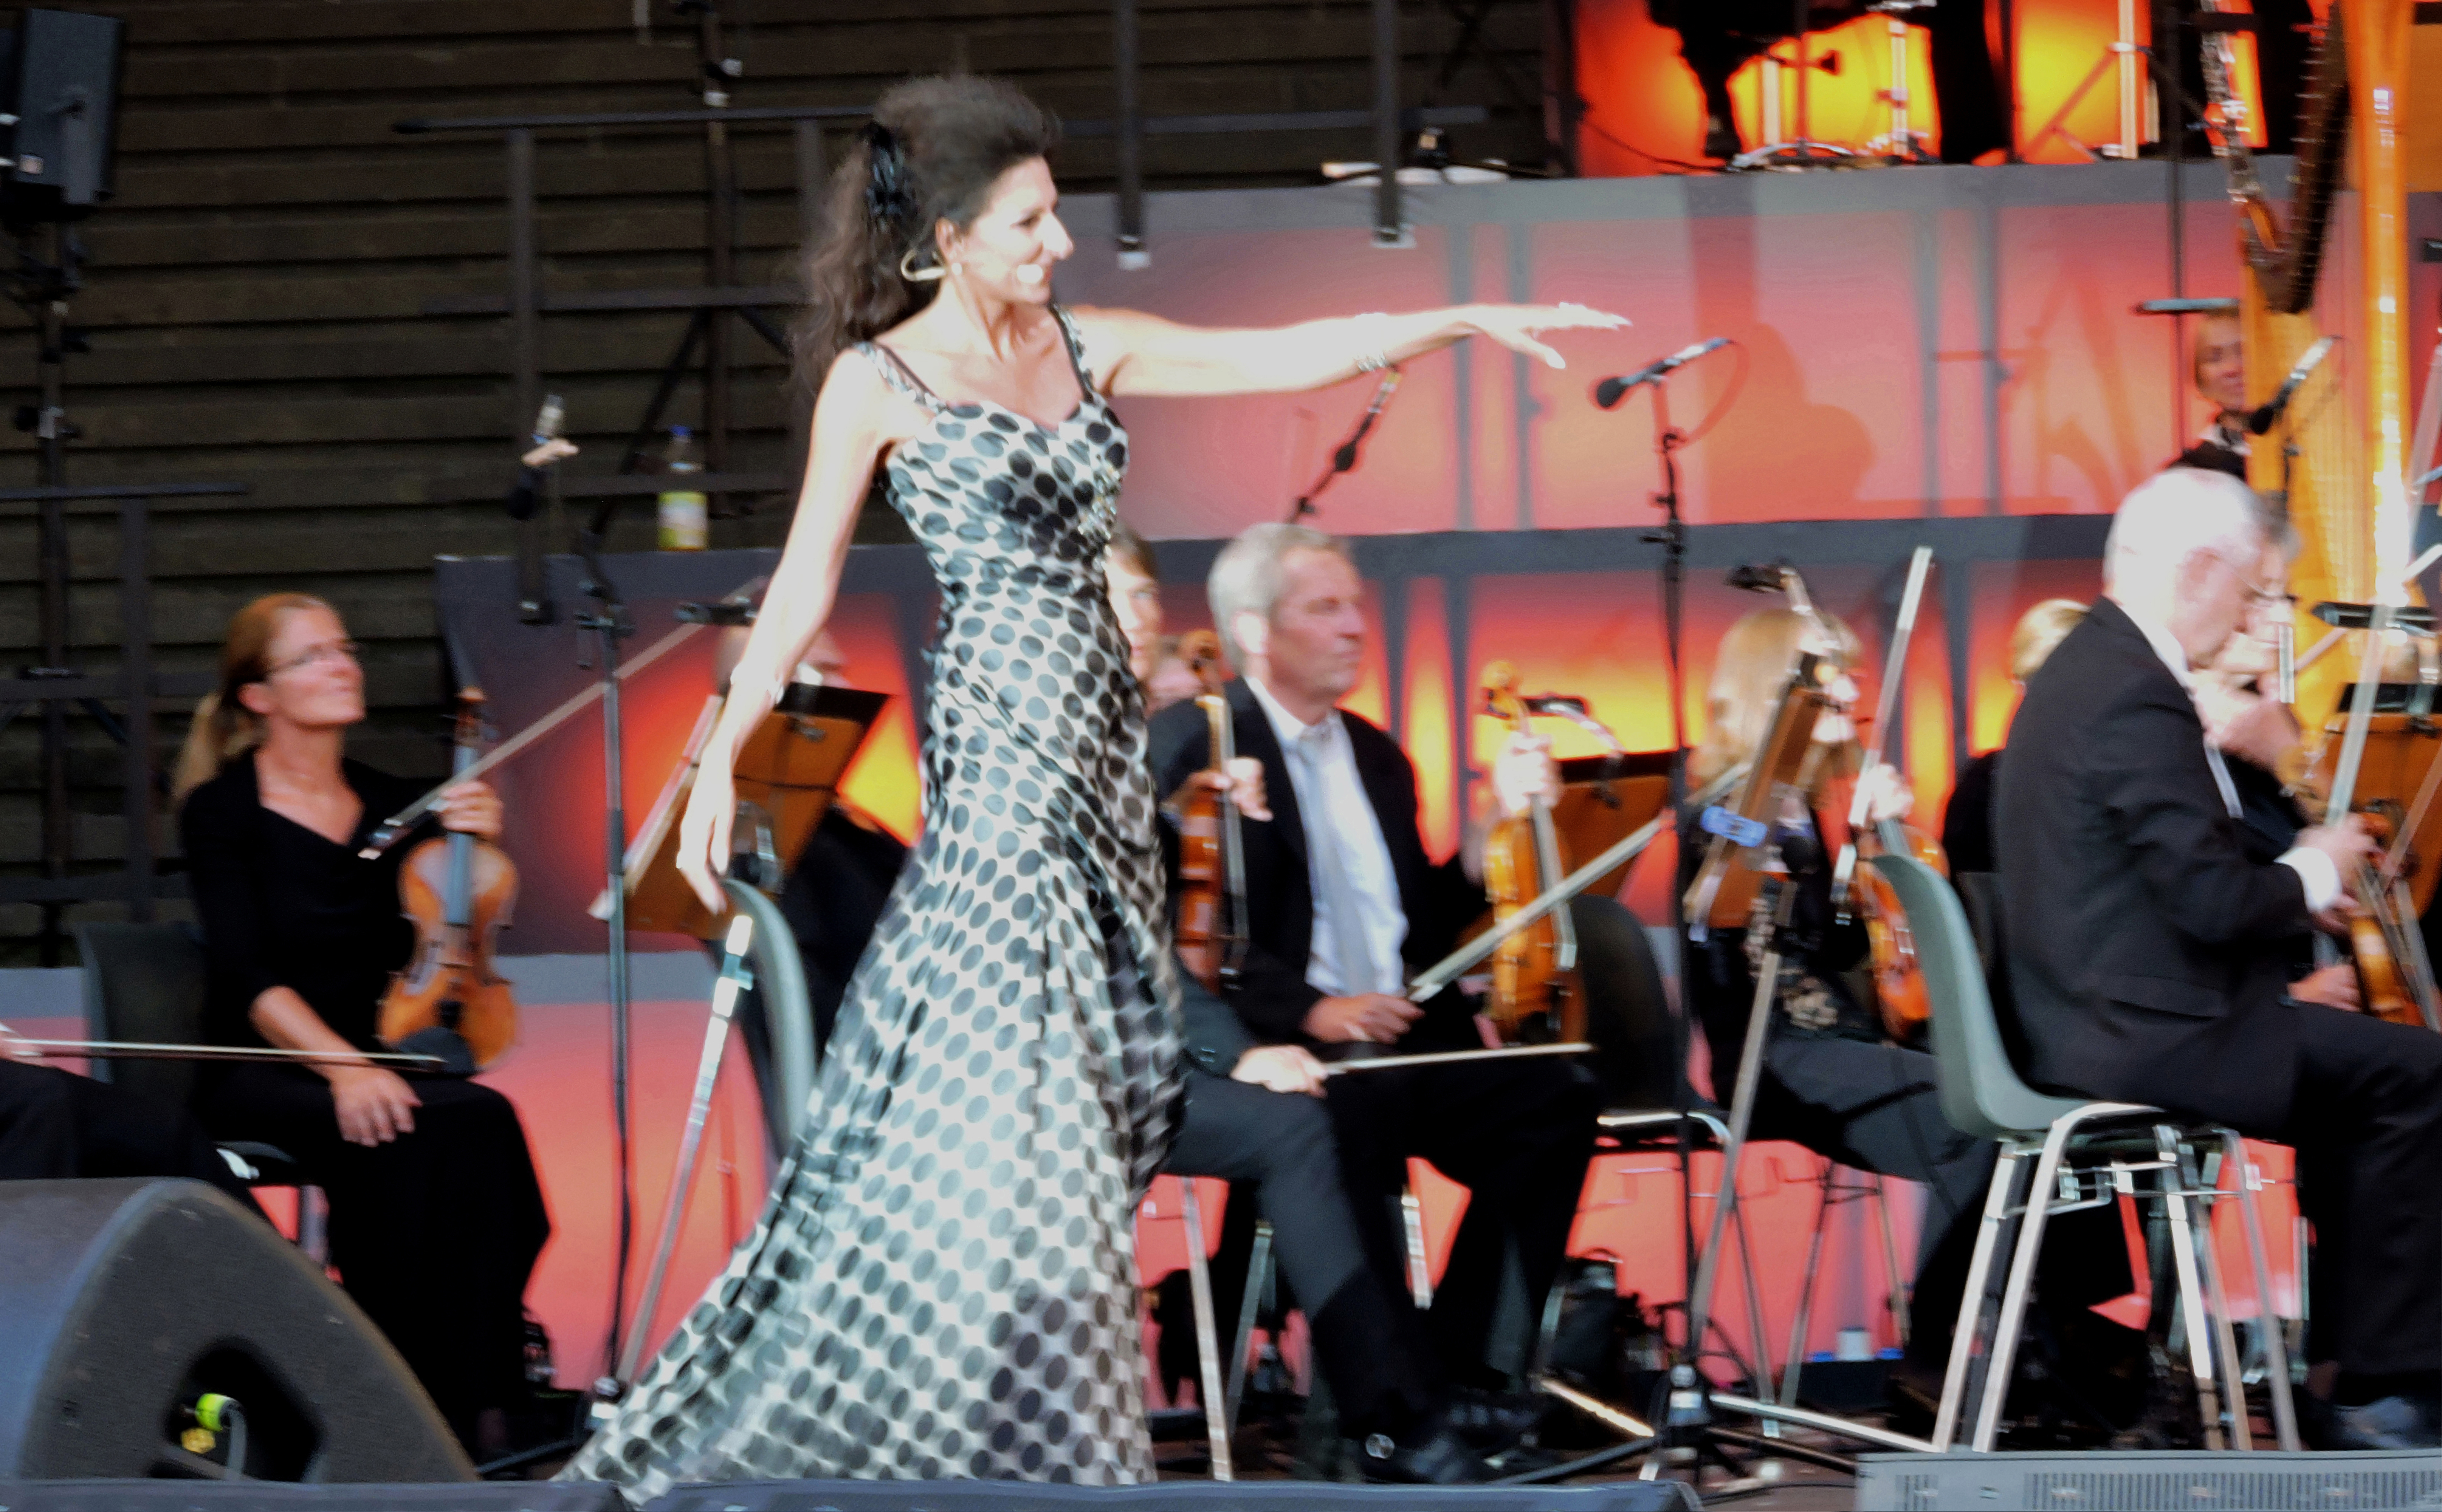 Lucia Aliberti⚘Gendarmenmarkt⚘Classic Opern Air⚘Concert⚘Berlin⚘On Stage⚘Photo taken from the Newspaper⚘:http://www.luciaaliberti.it #luciaaliberti #gendarmenmarkt #classicopernair #concert #berlin #onstage